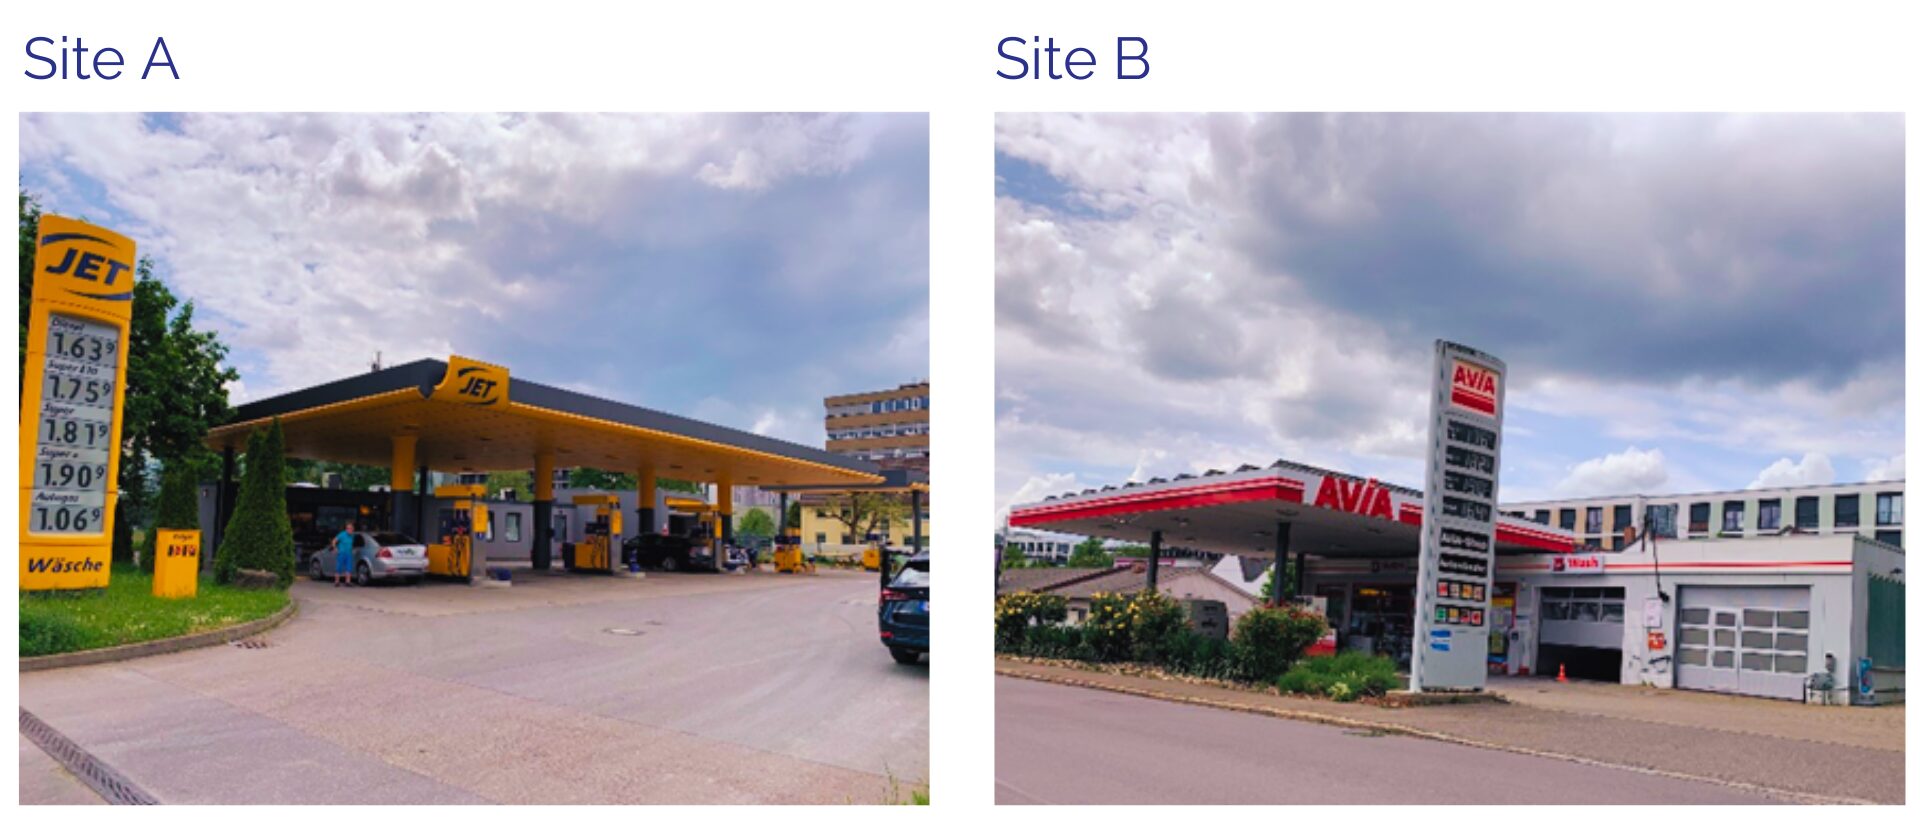 2 petrol stations, Jet and AVIA in Stuttgart, Germany